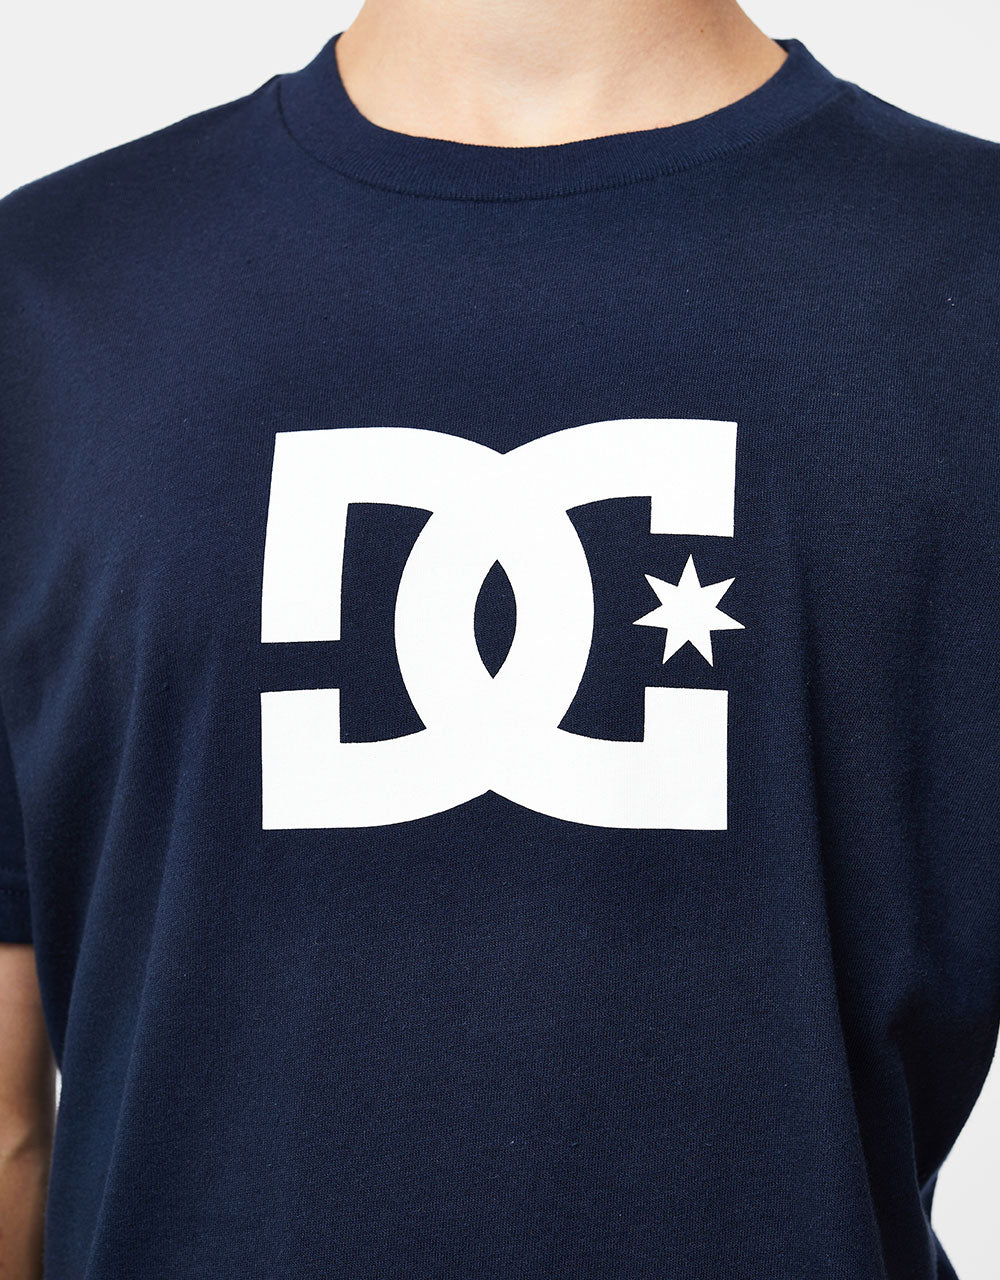 DC Star Kids T-Shirt - Navy Blazer